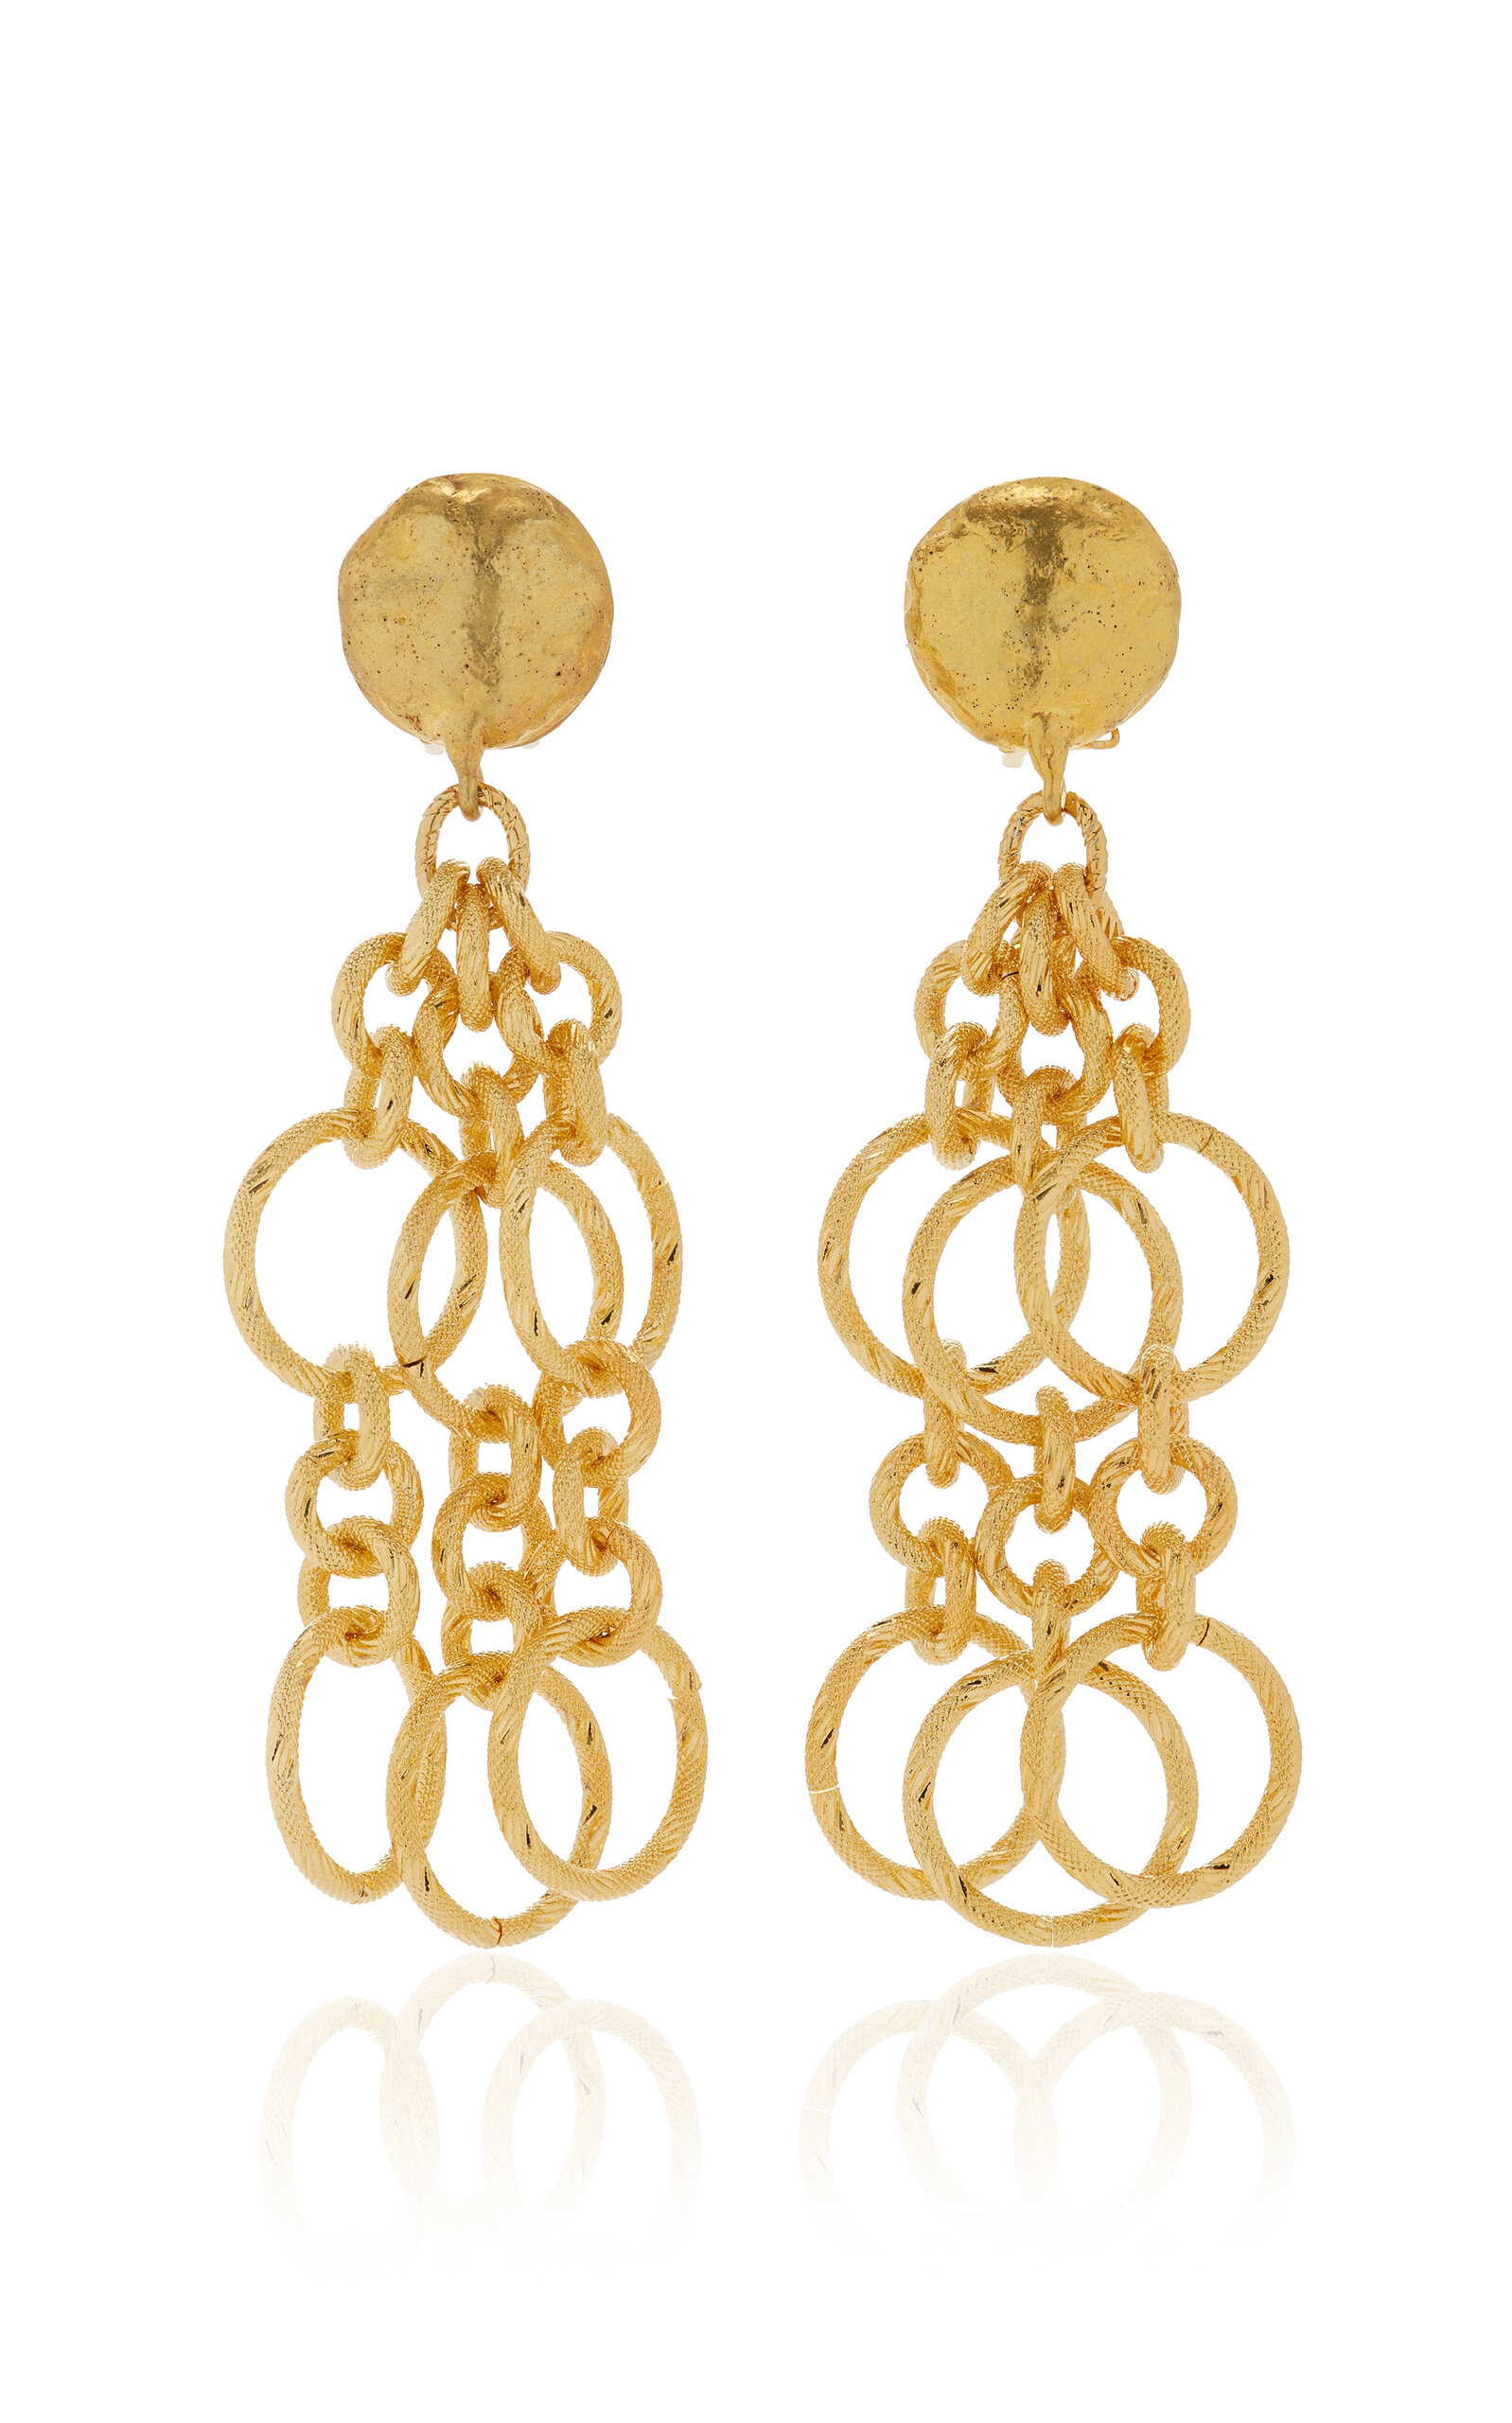 Platon 22K Gold-Plated Earrings